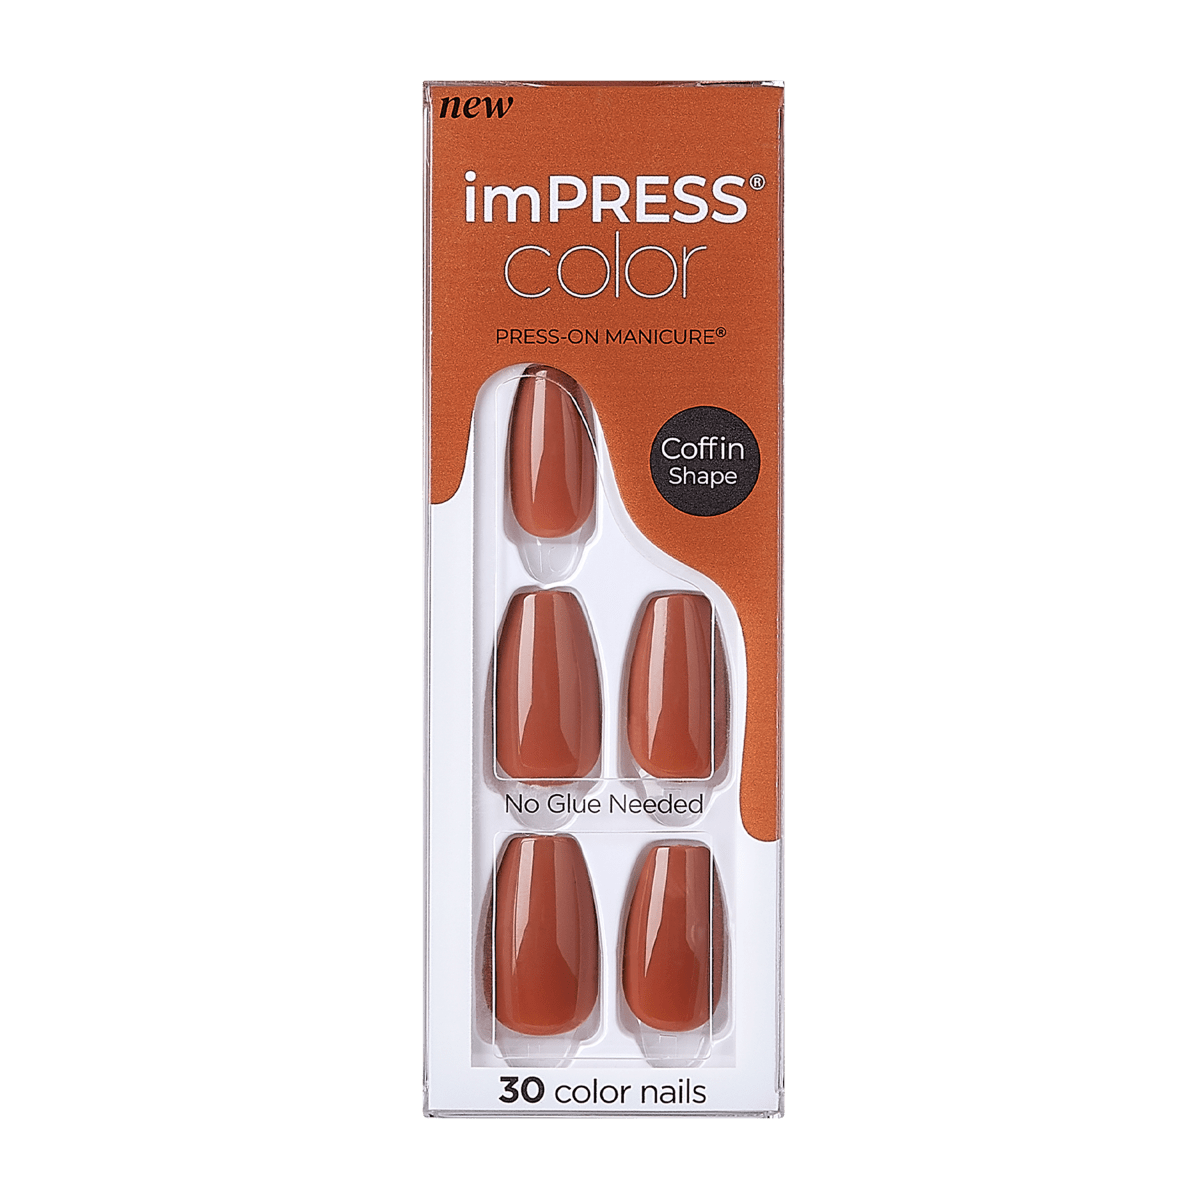 imPRESS Color Press-On Manicure - Miss Me